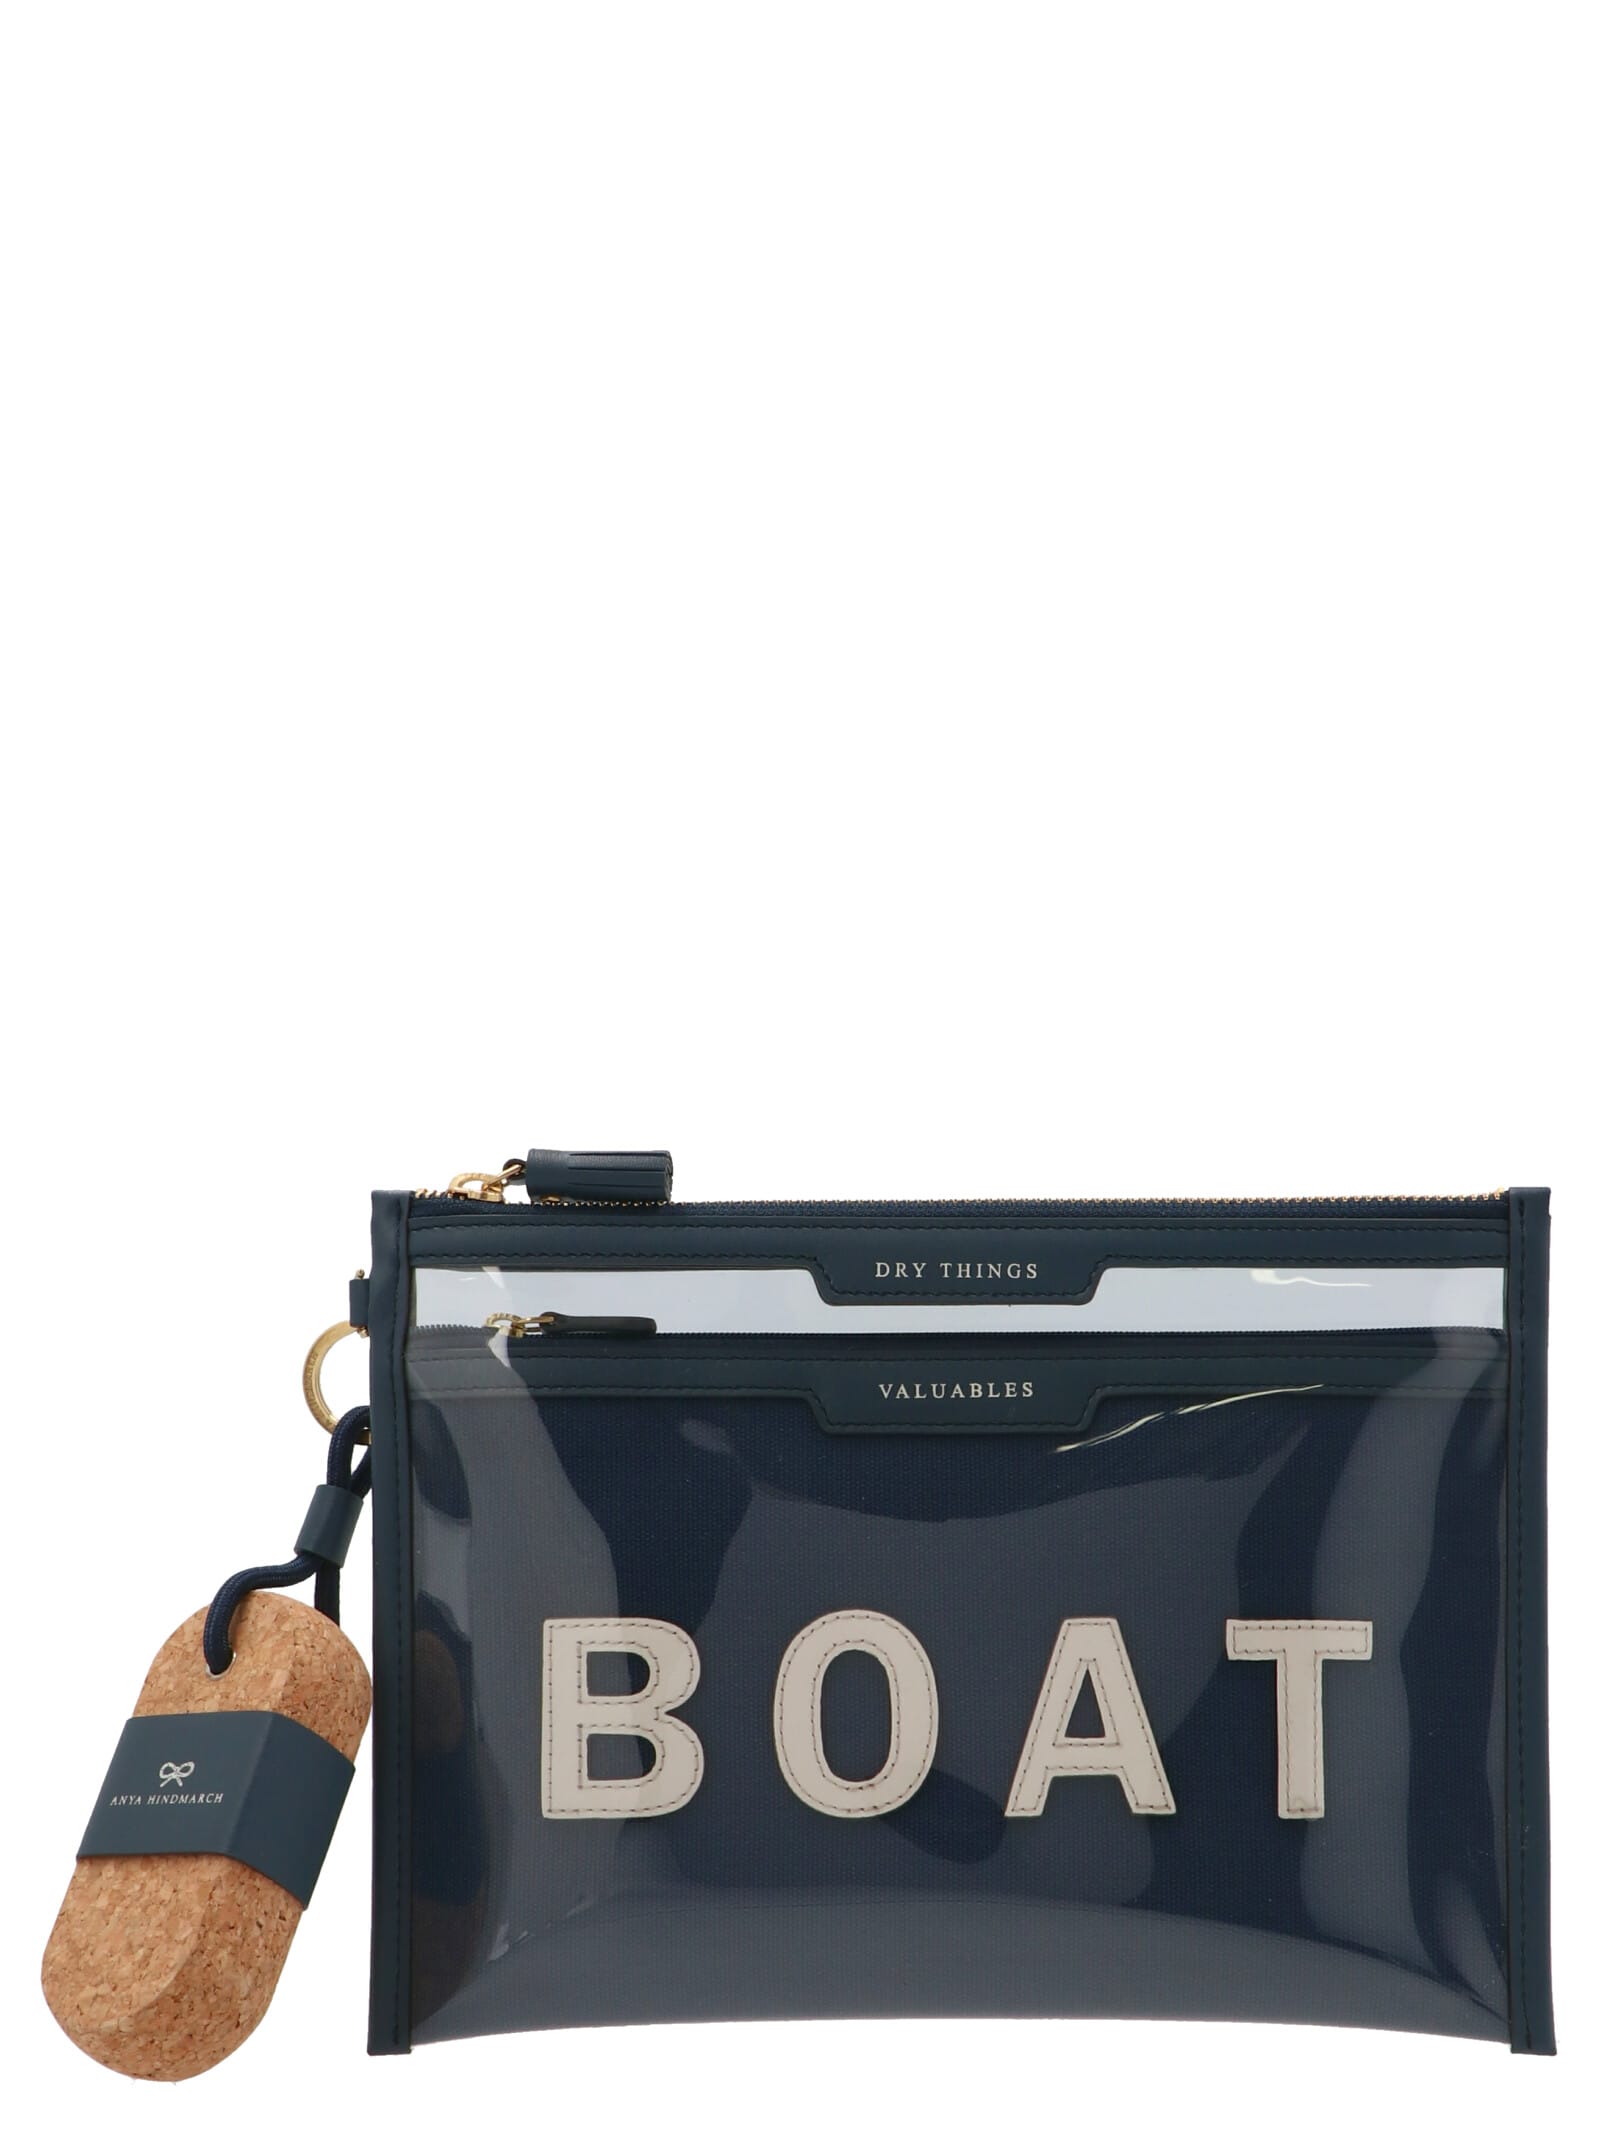 Anya Hindmarch dry Things Boat Clutch Bag